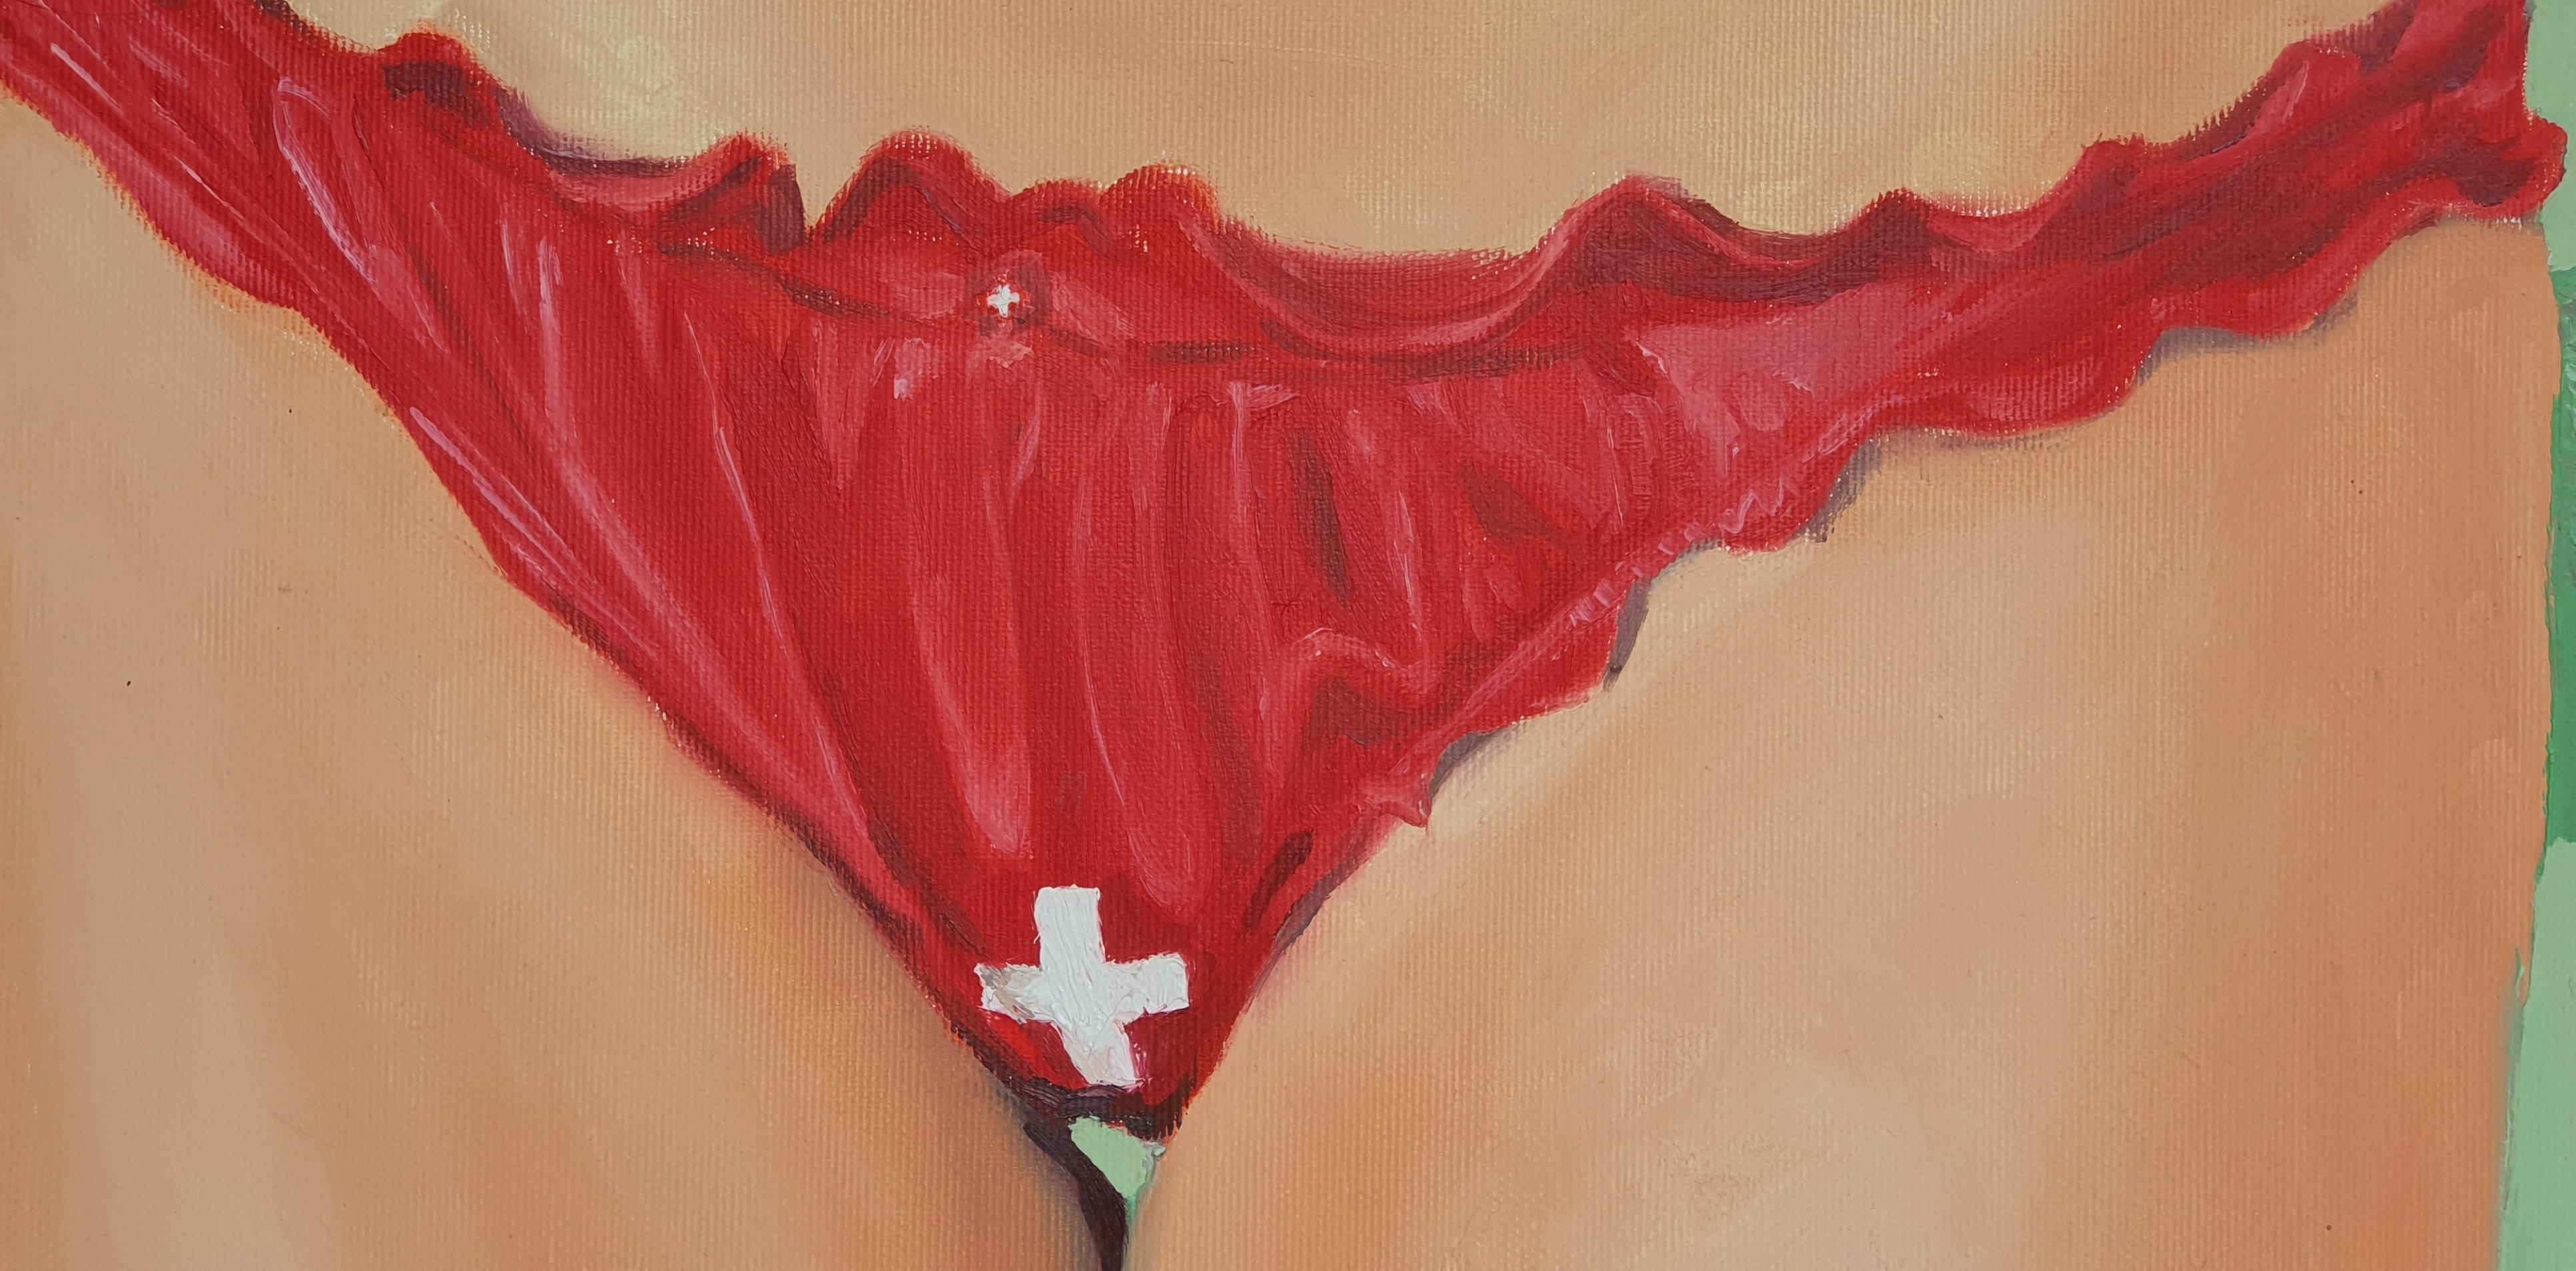 Switzerland - Contemporary Art, Figurative Art, Flag, Red, Green, Alps, Schweiz - Painting by Mihai Florea